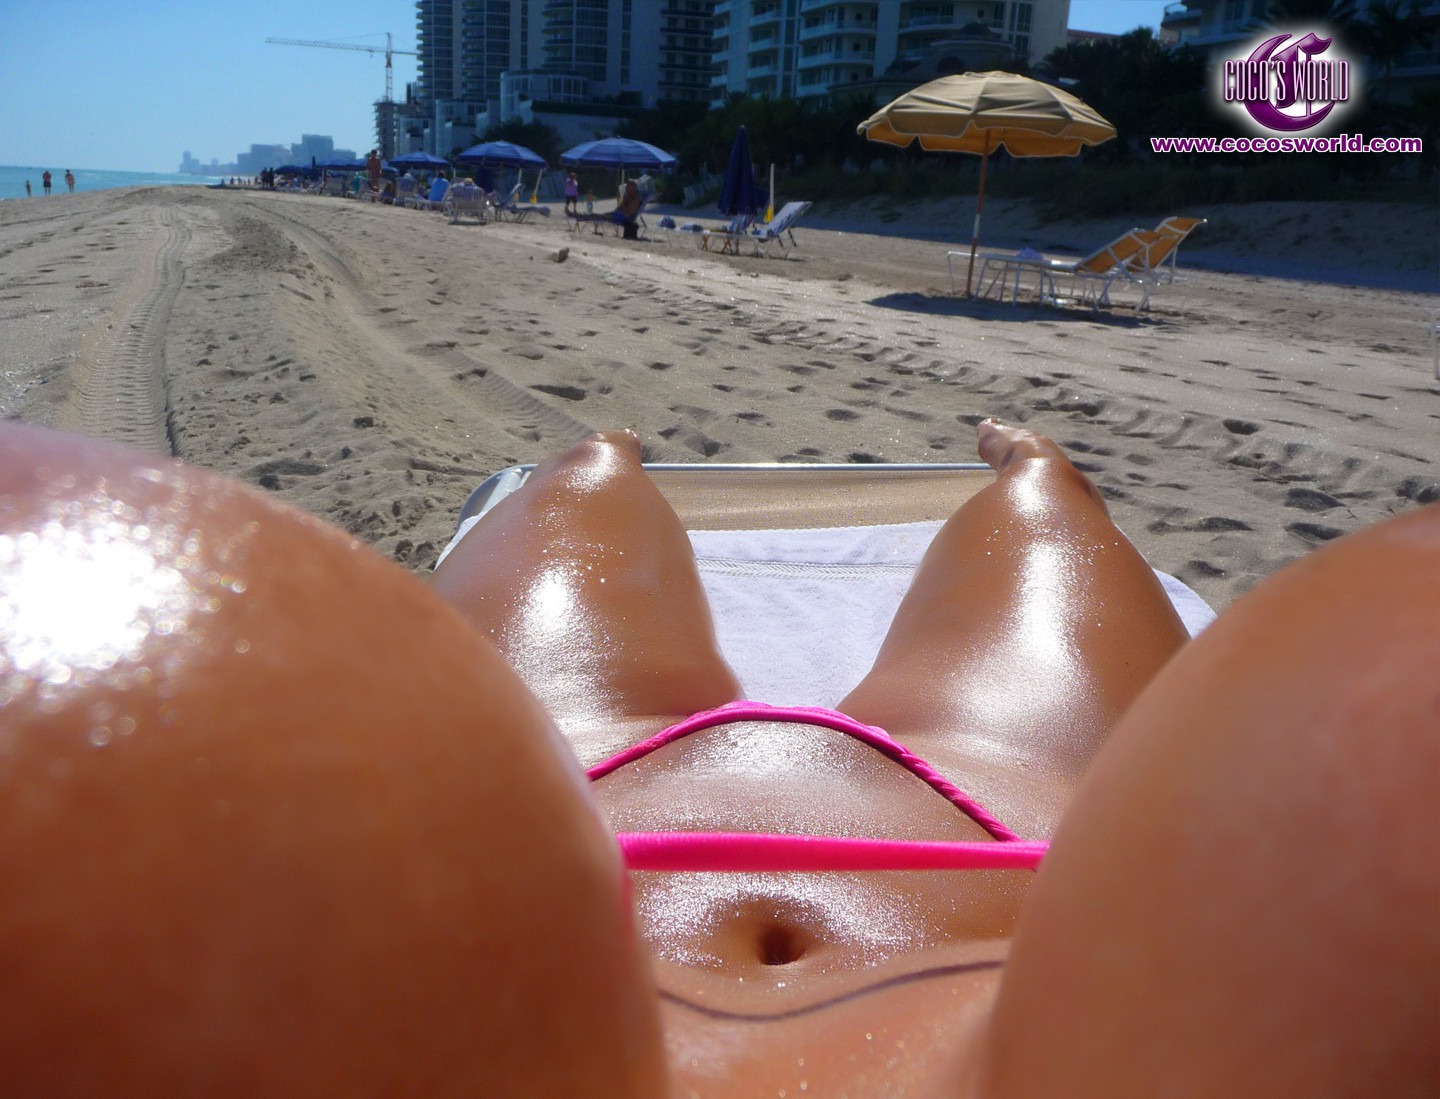 pawg riding dildo solo milf dildo orgasm free porn video unlimited #Bikini#Plesure#hottestview#lookingdown#bodyview#oiled#verysexy#boobs#tits#sunbathing#legs